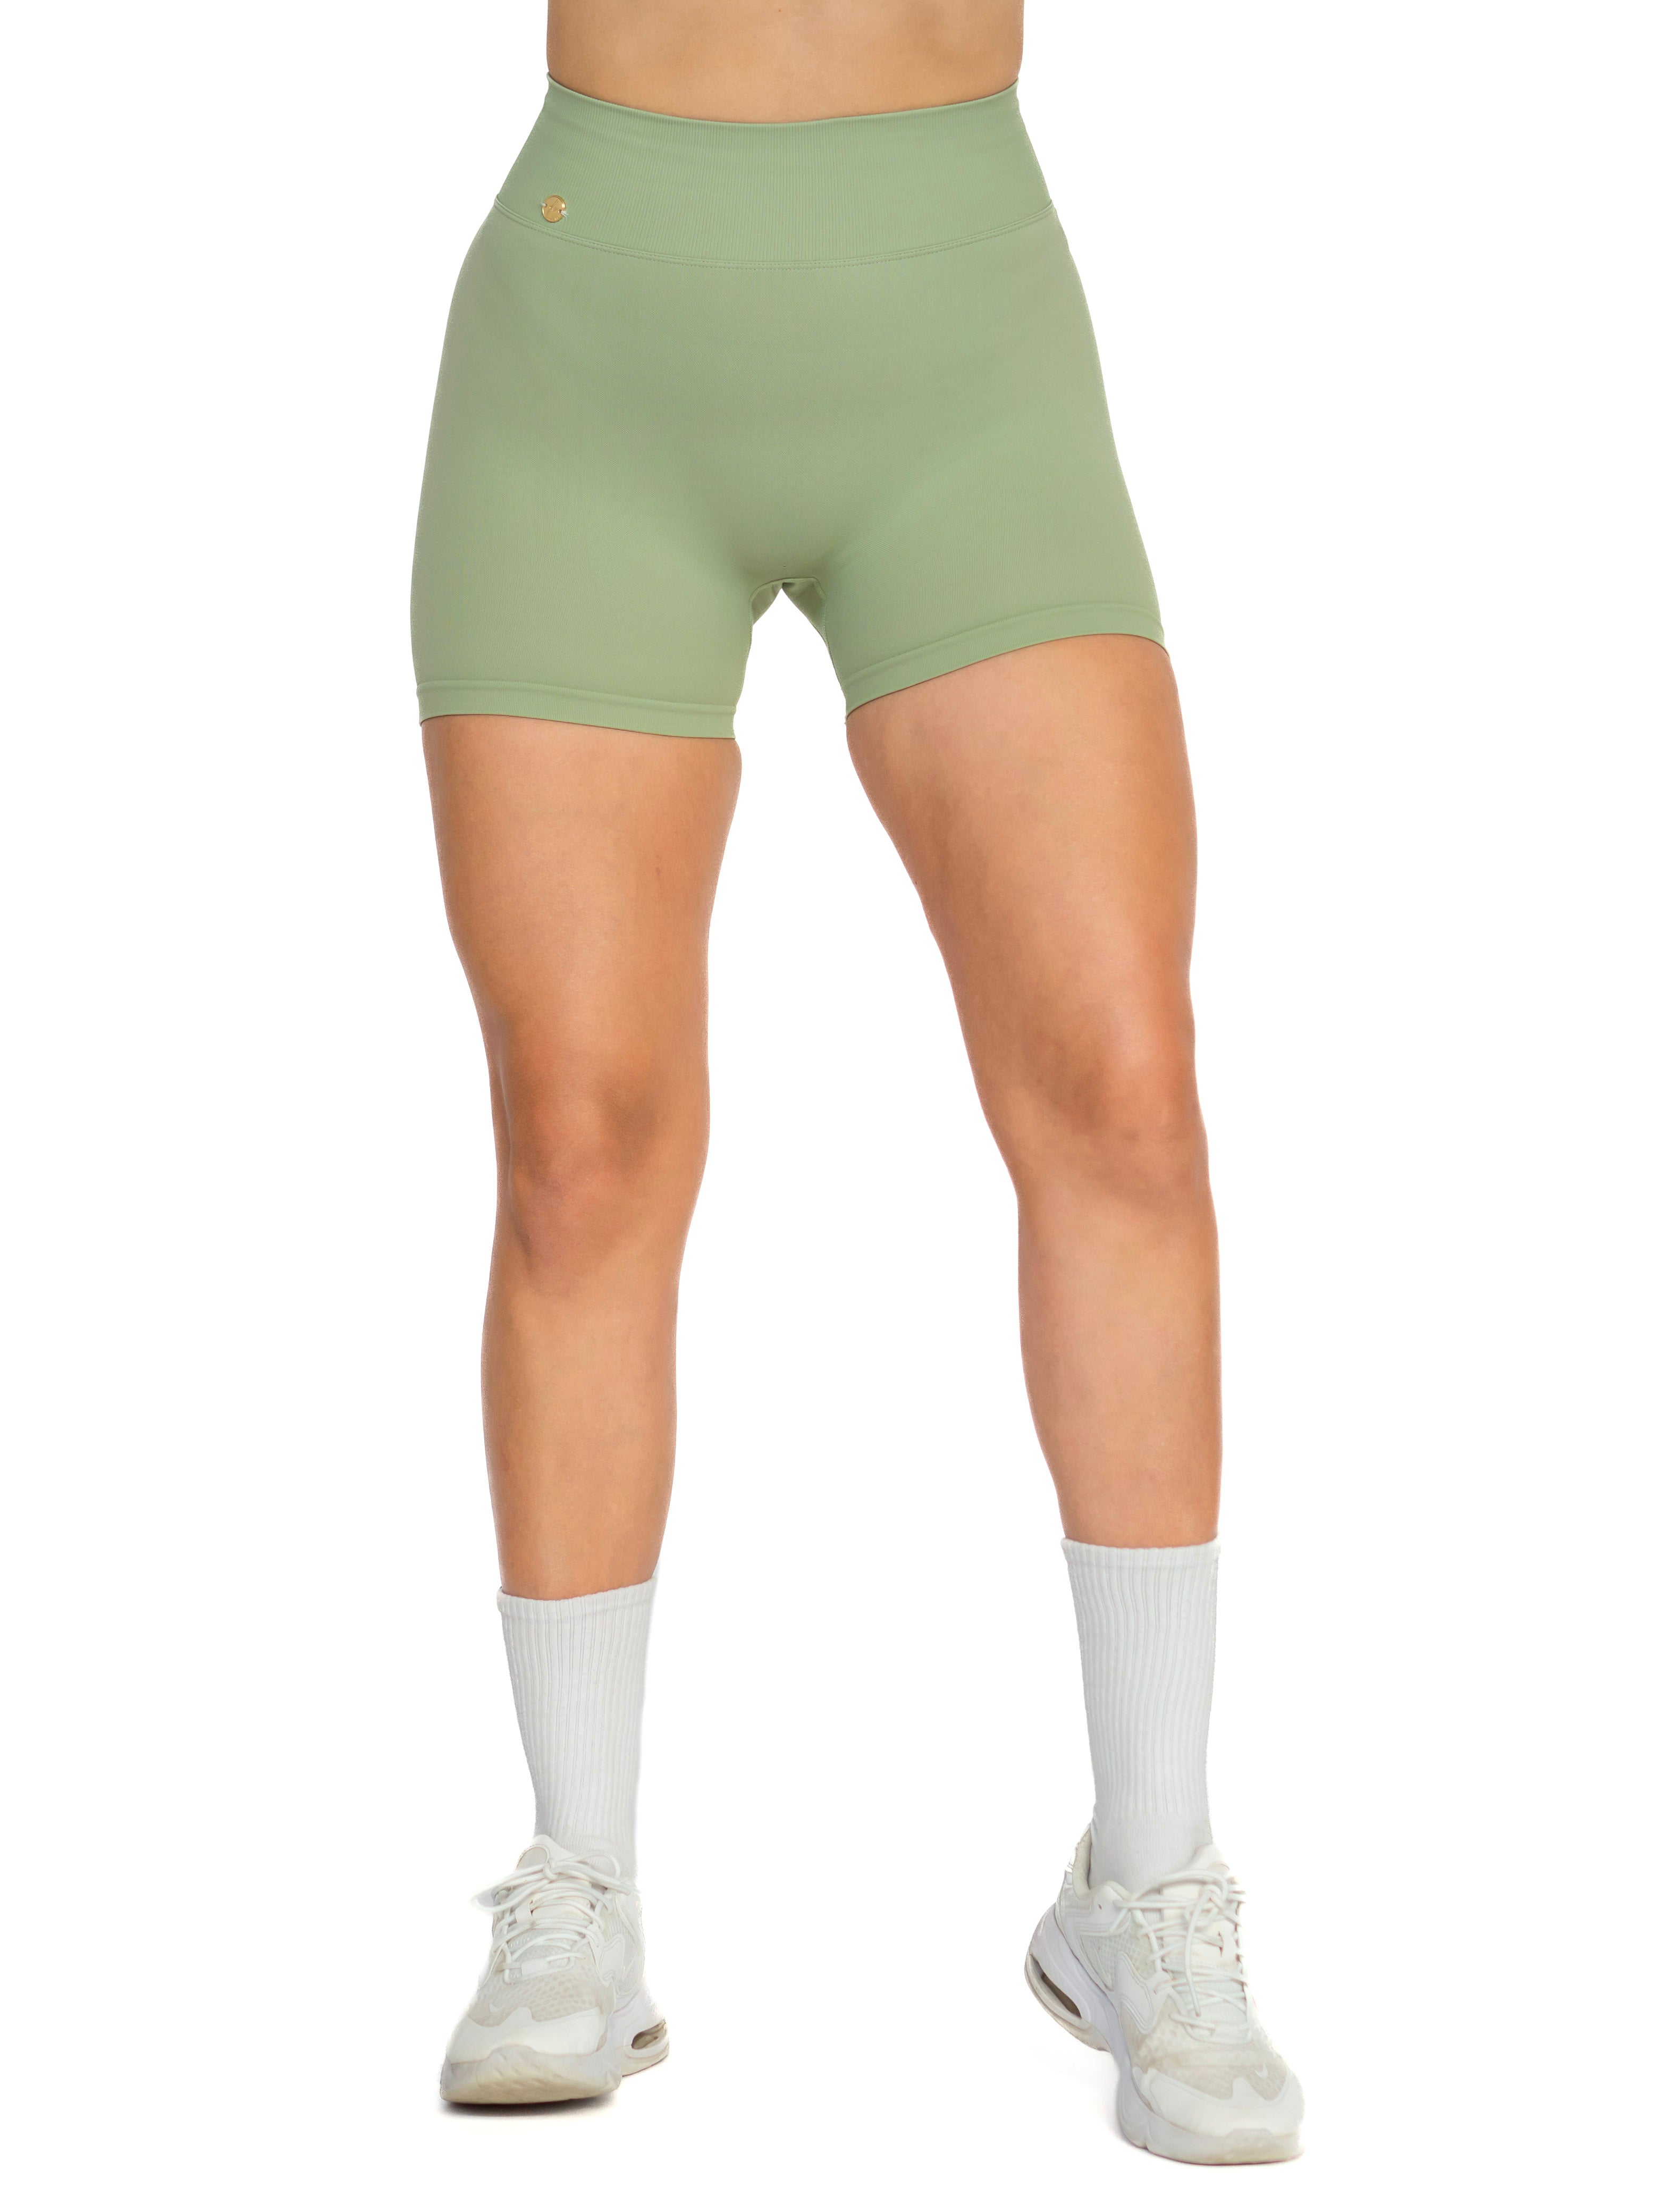 Perfect Peachy Shorts - Pale Green